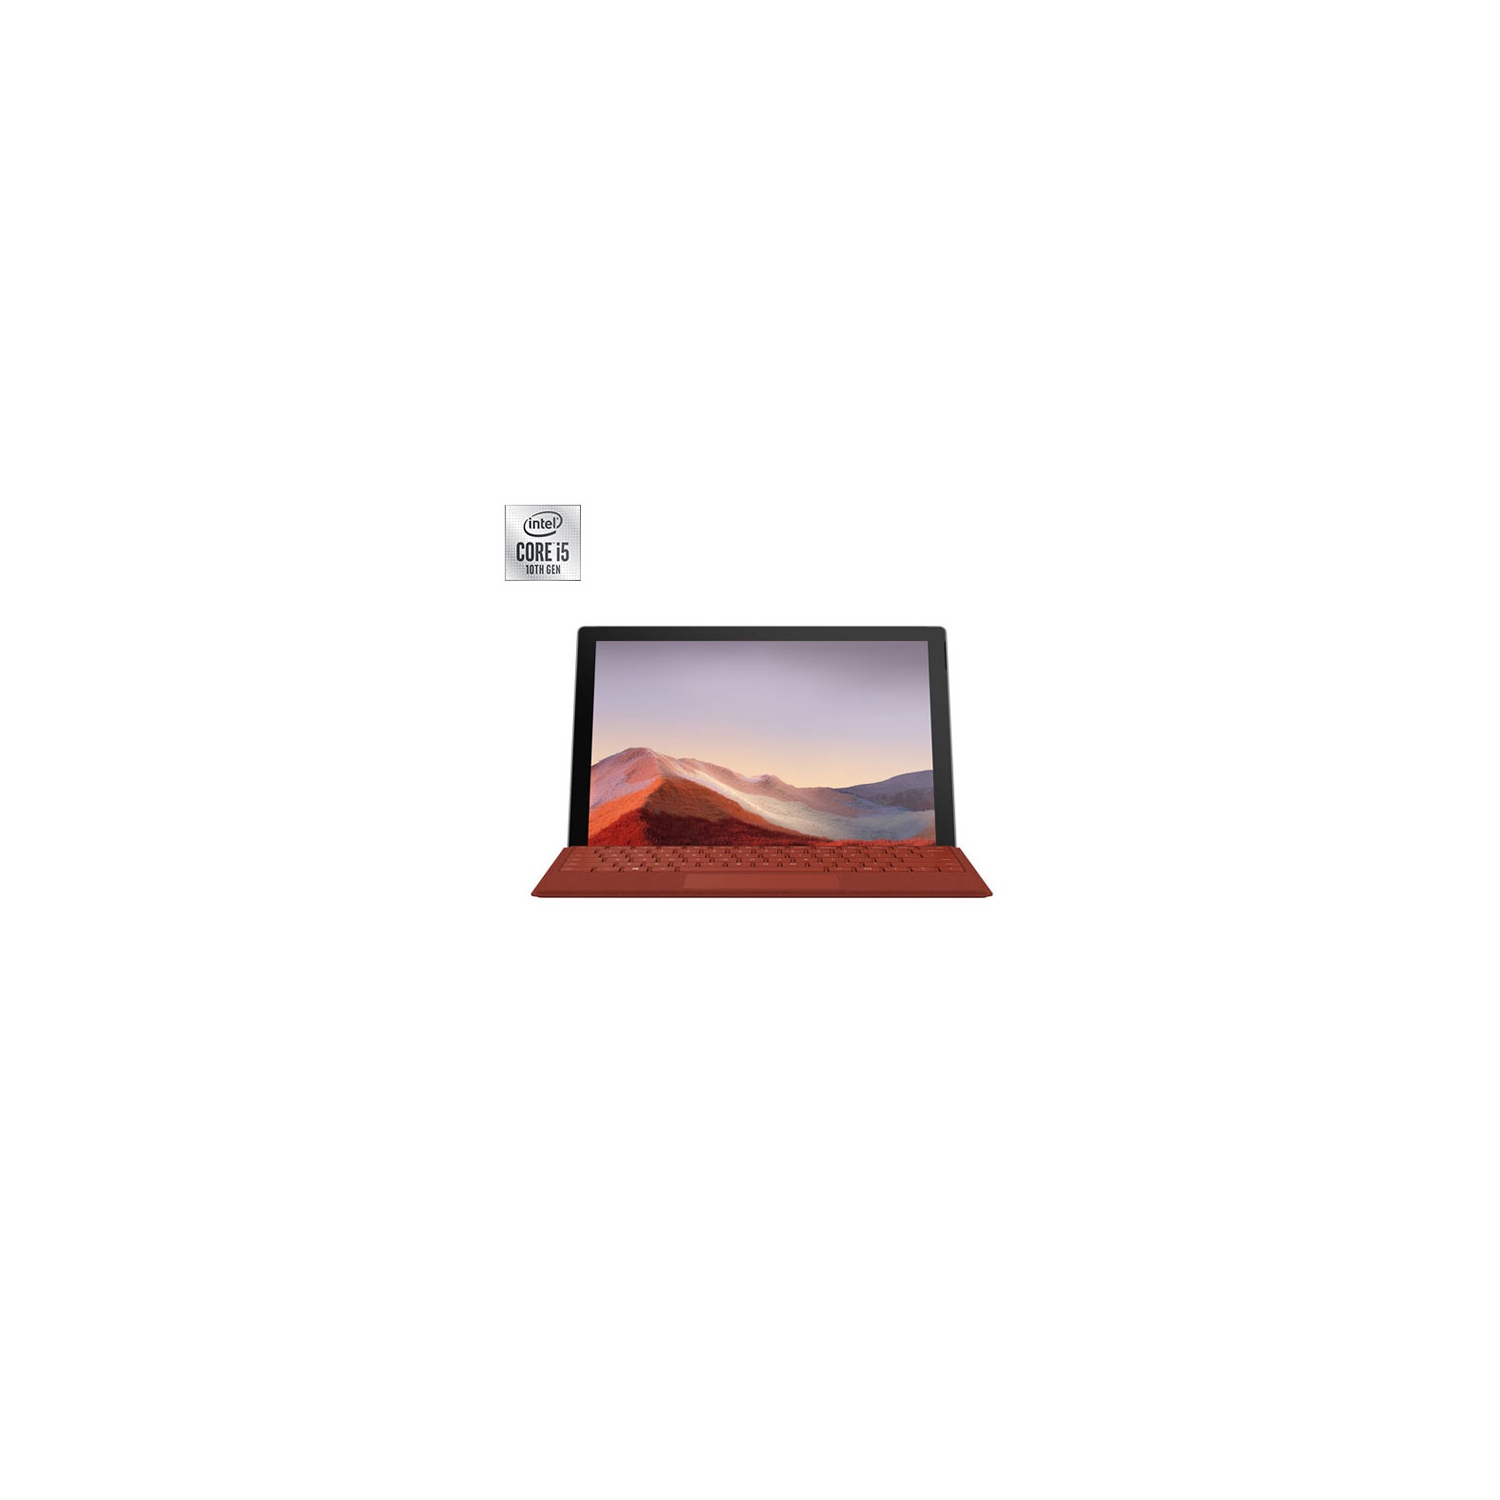 Refurbished (Fair) - Microsoft Surface Pro 7 12.3" 128 Windows 10 Tablet With 10th Gen Intel Core i5/8 RAM - Platinum